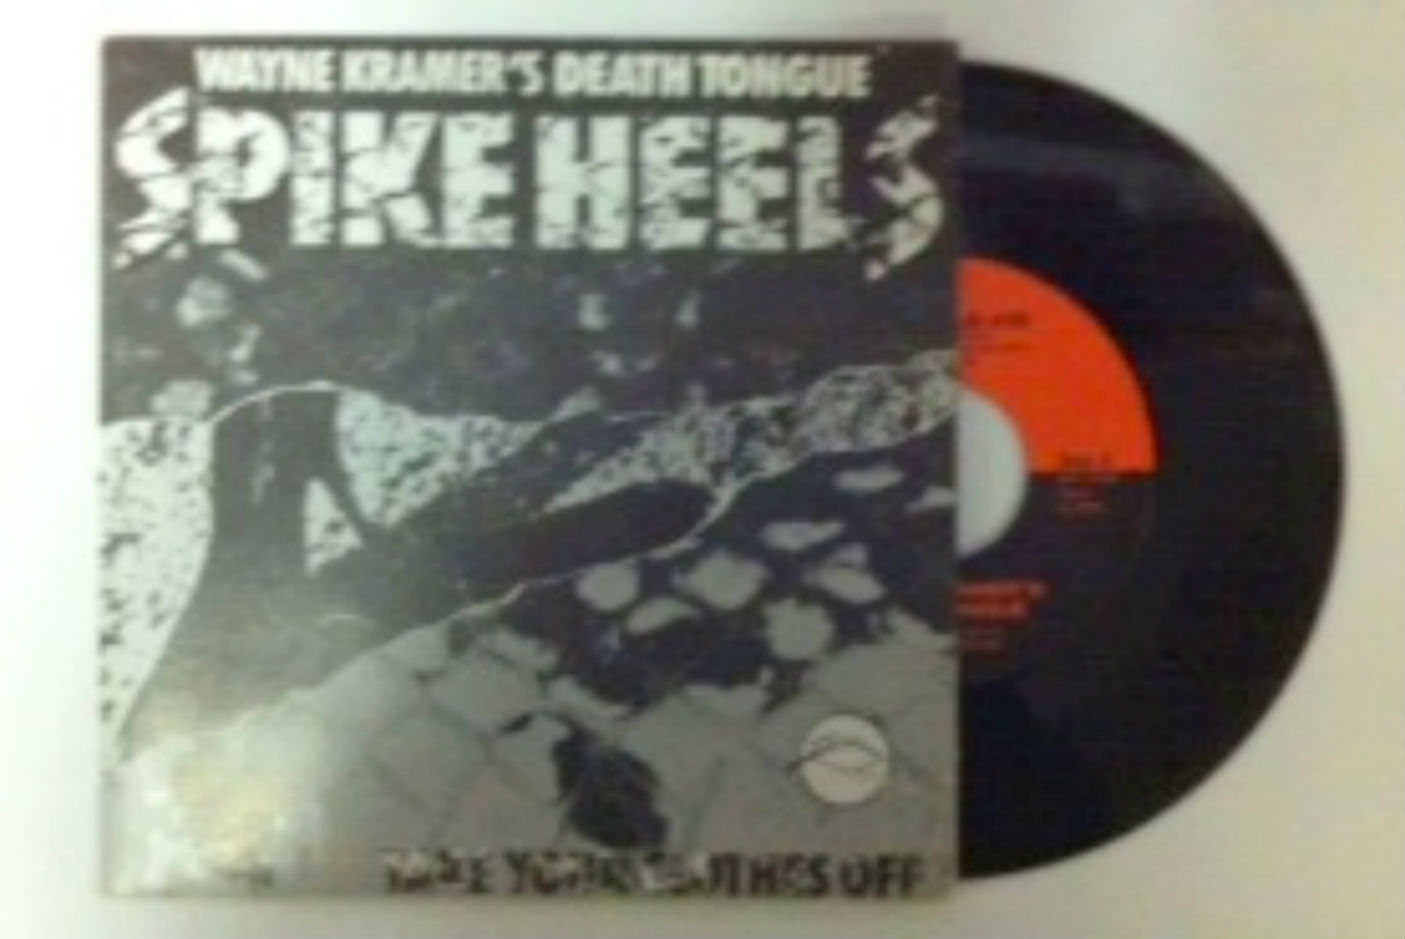 Wayne Kramer's Death Tongue / Spike Heels